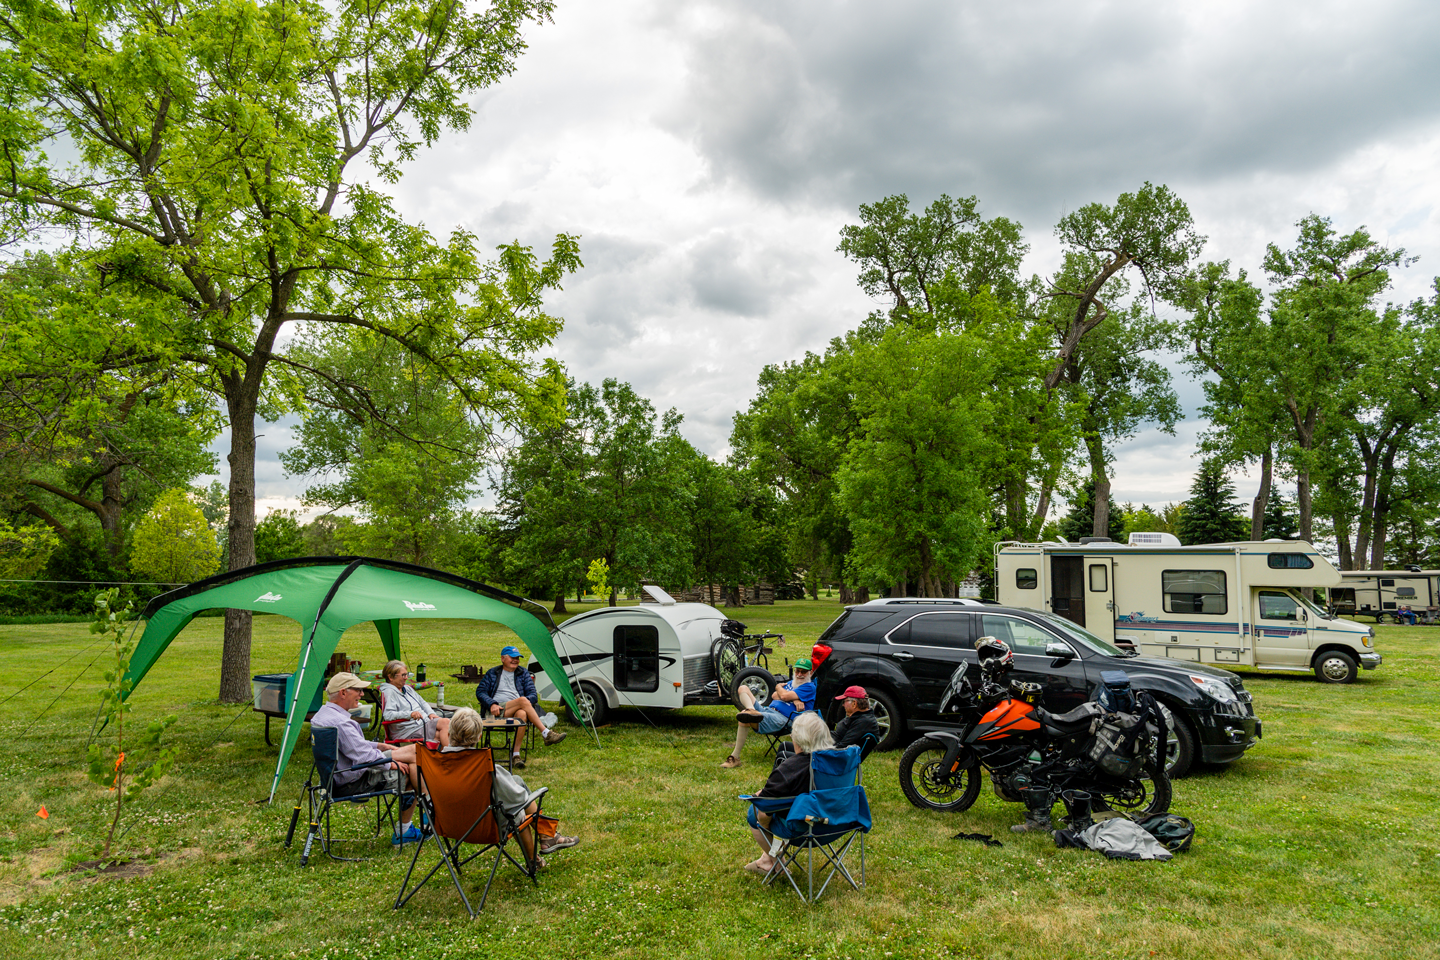 Follow these tips to enjoy peak camping season